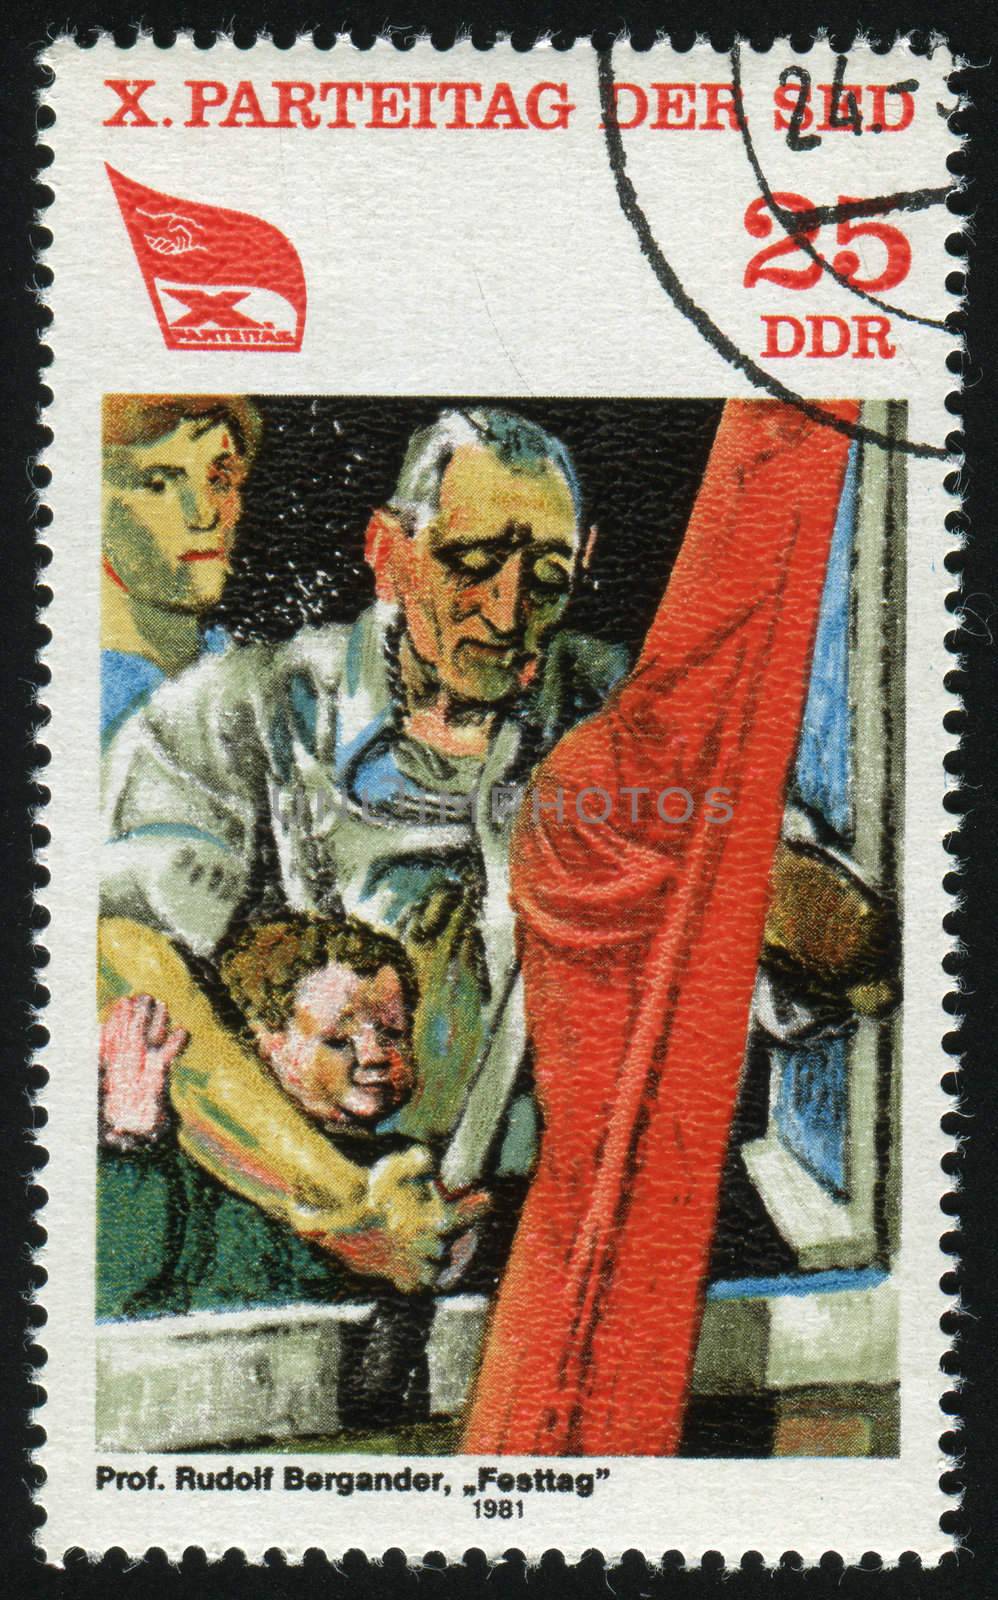 GERMANY- CIRCA 1981: stamp printed by Germany, shows Festivities, by Rudolf Bergander, circa 1981.